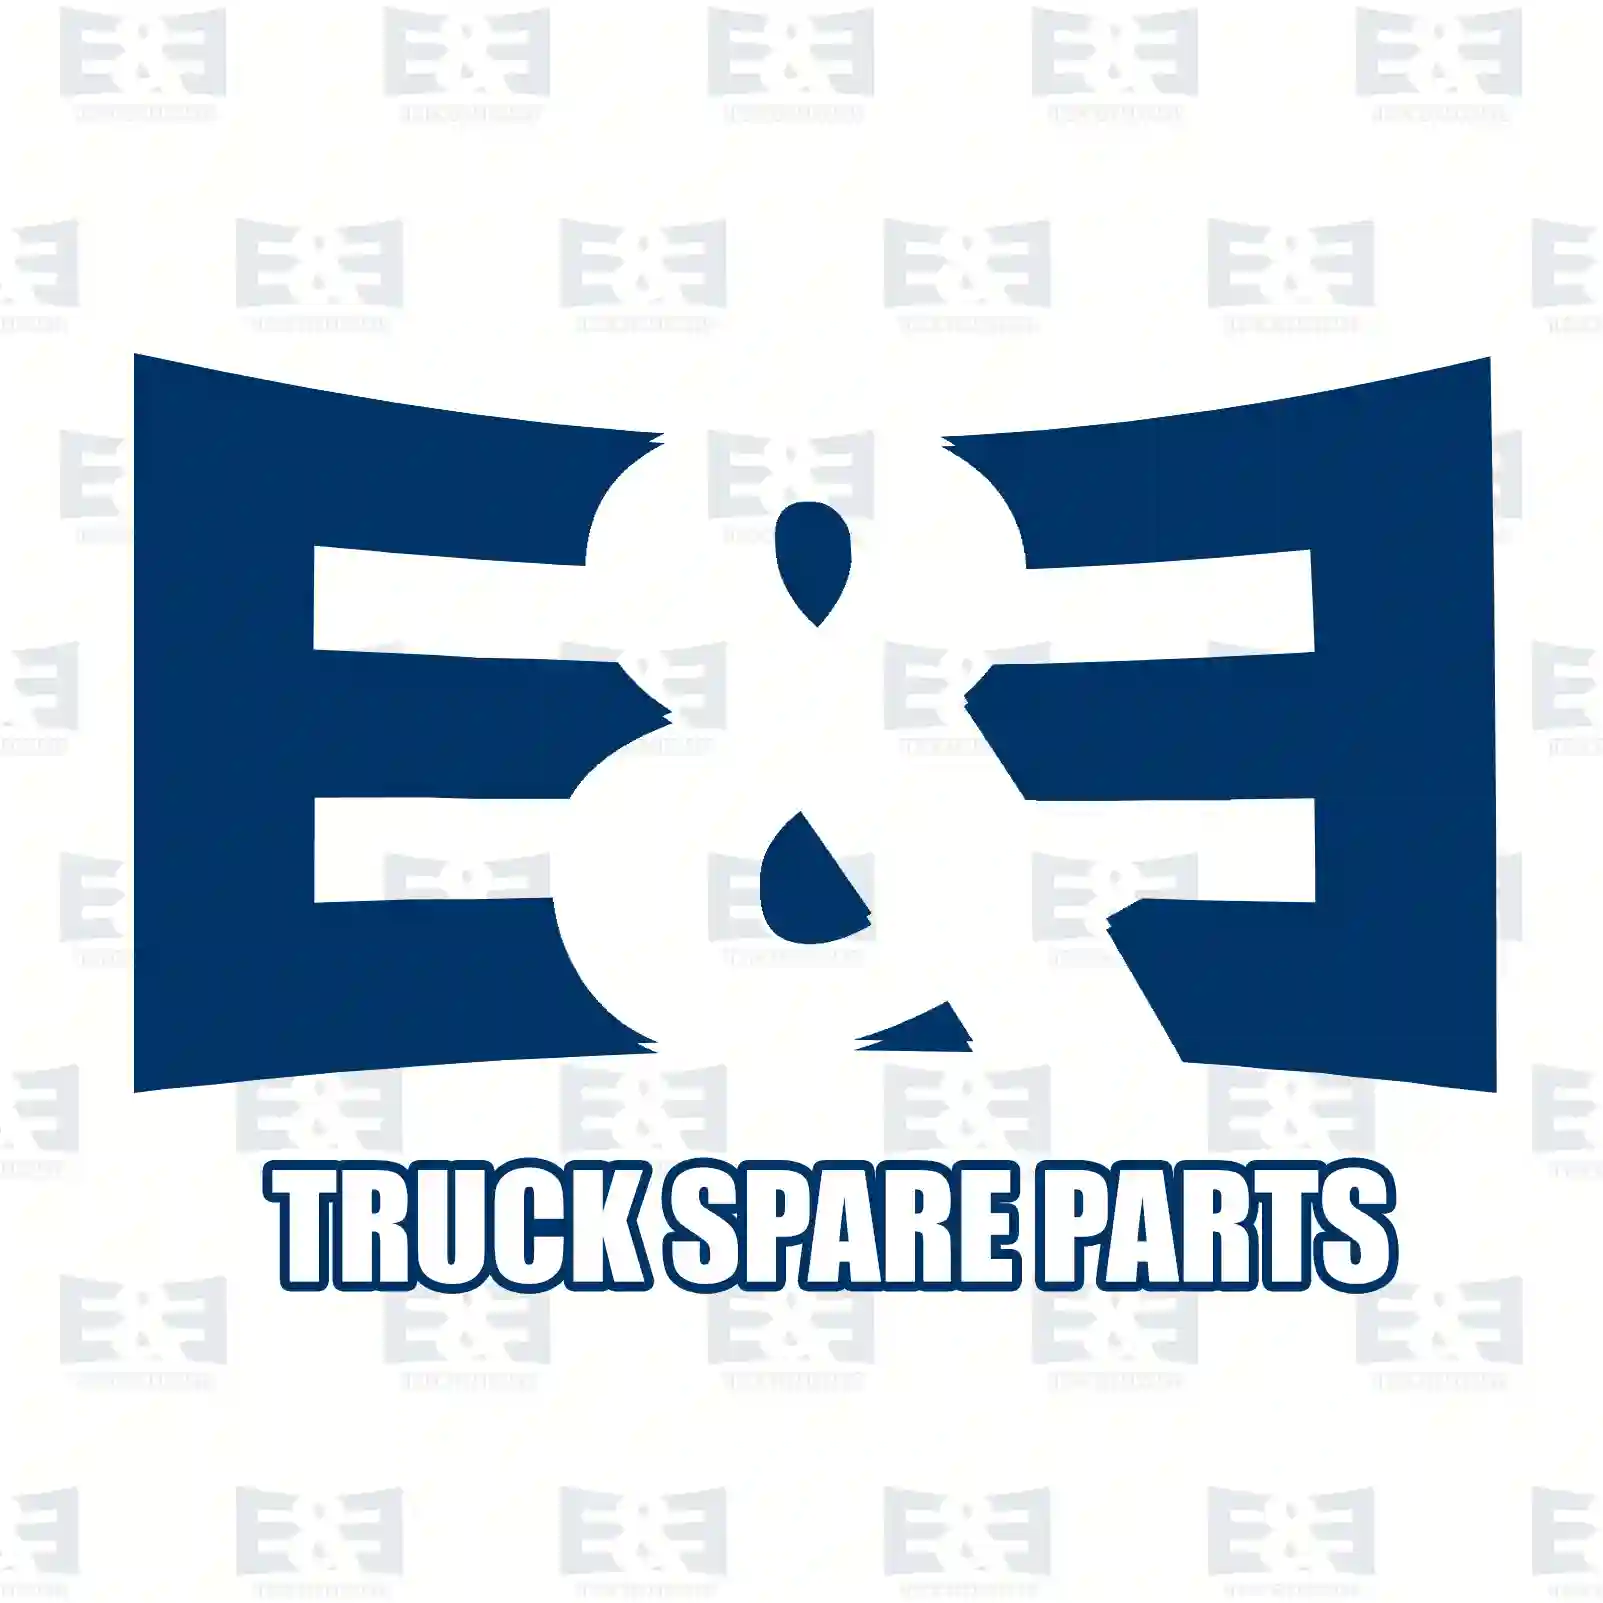 Input shaft, 2E2278835, 7420771700, 20771 ||  2E2278835 E&E Truck Spare Parts | Truck Spare Parts, Auotomotive Spare Parts Input shaft, 2E2278835, 7420771700, 20771 ||  2E2278835 E&E Truck Spare Parts | Truck Spare Parts, Auotomotive Spare Parts